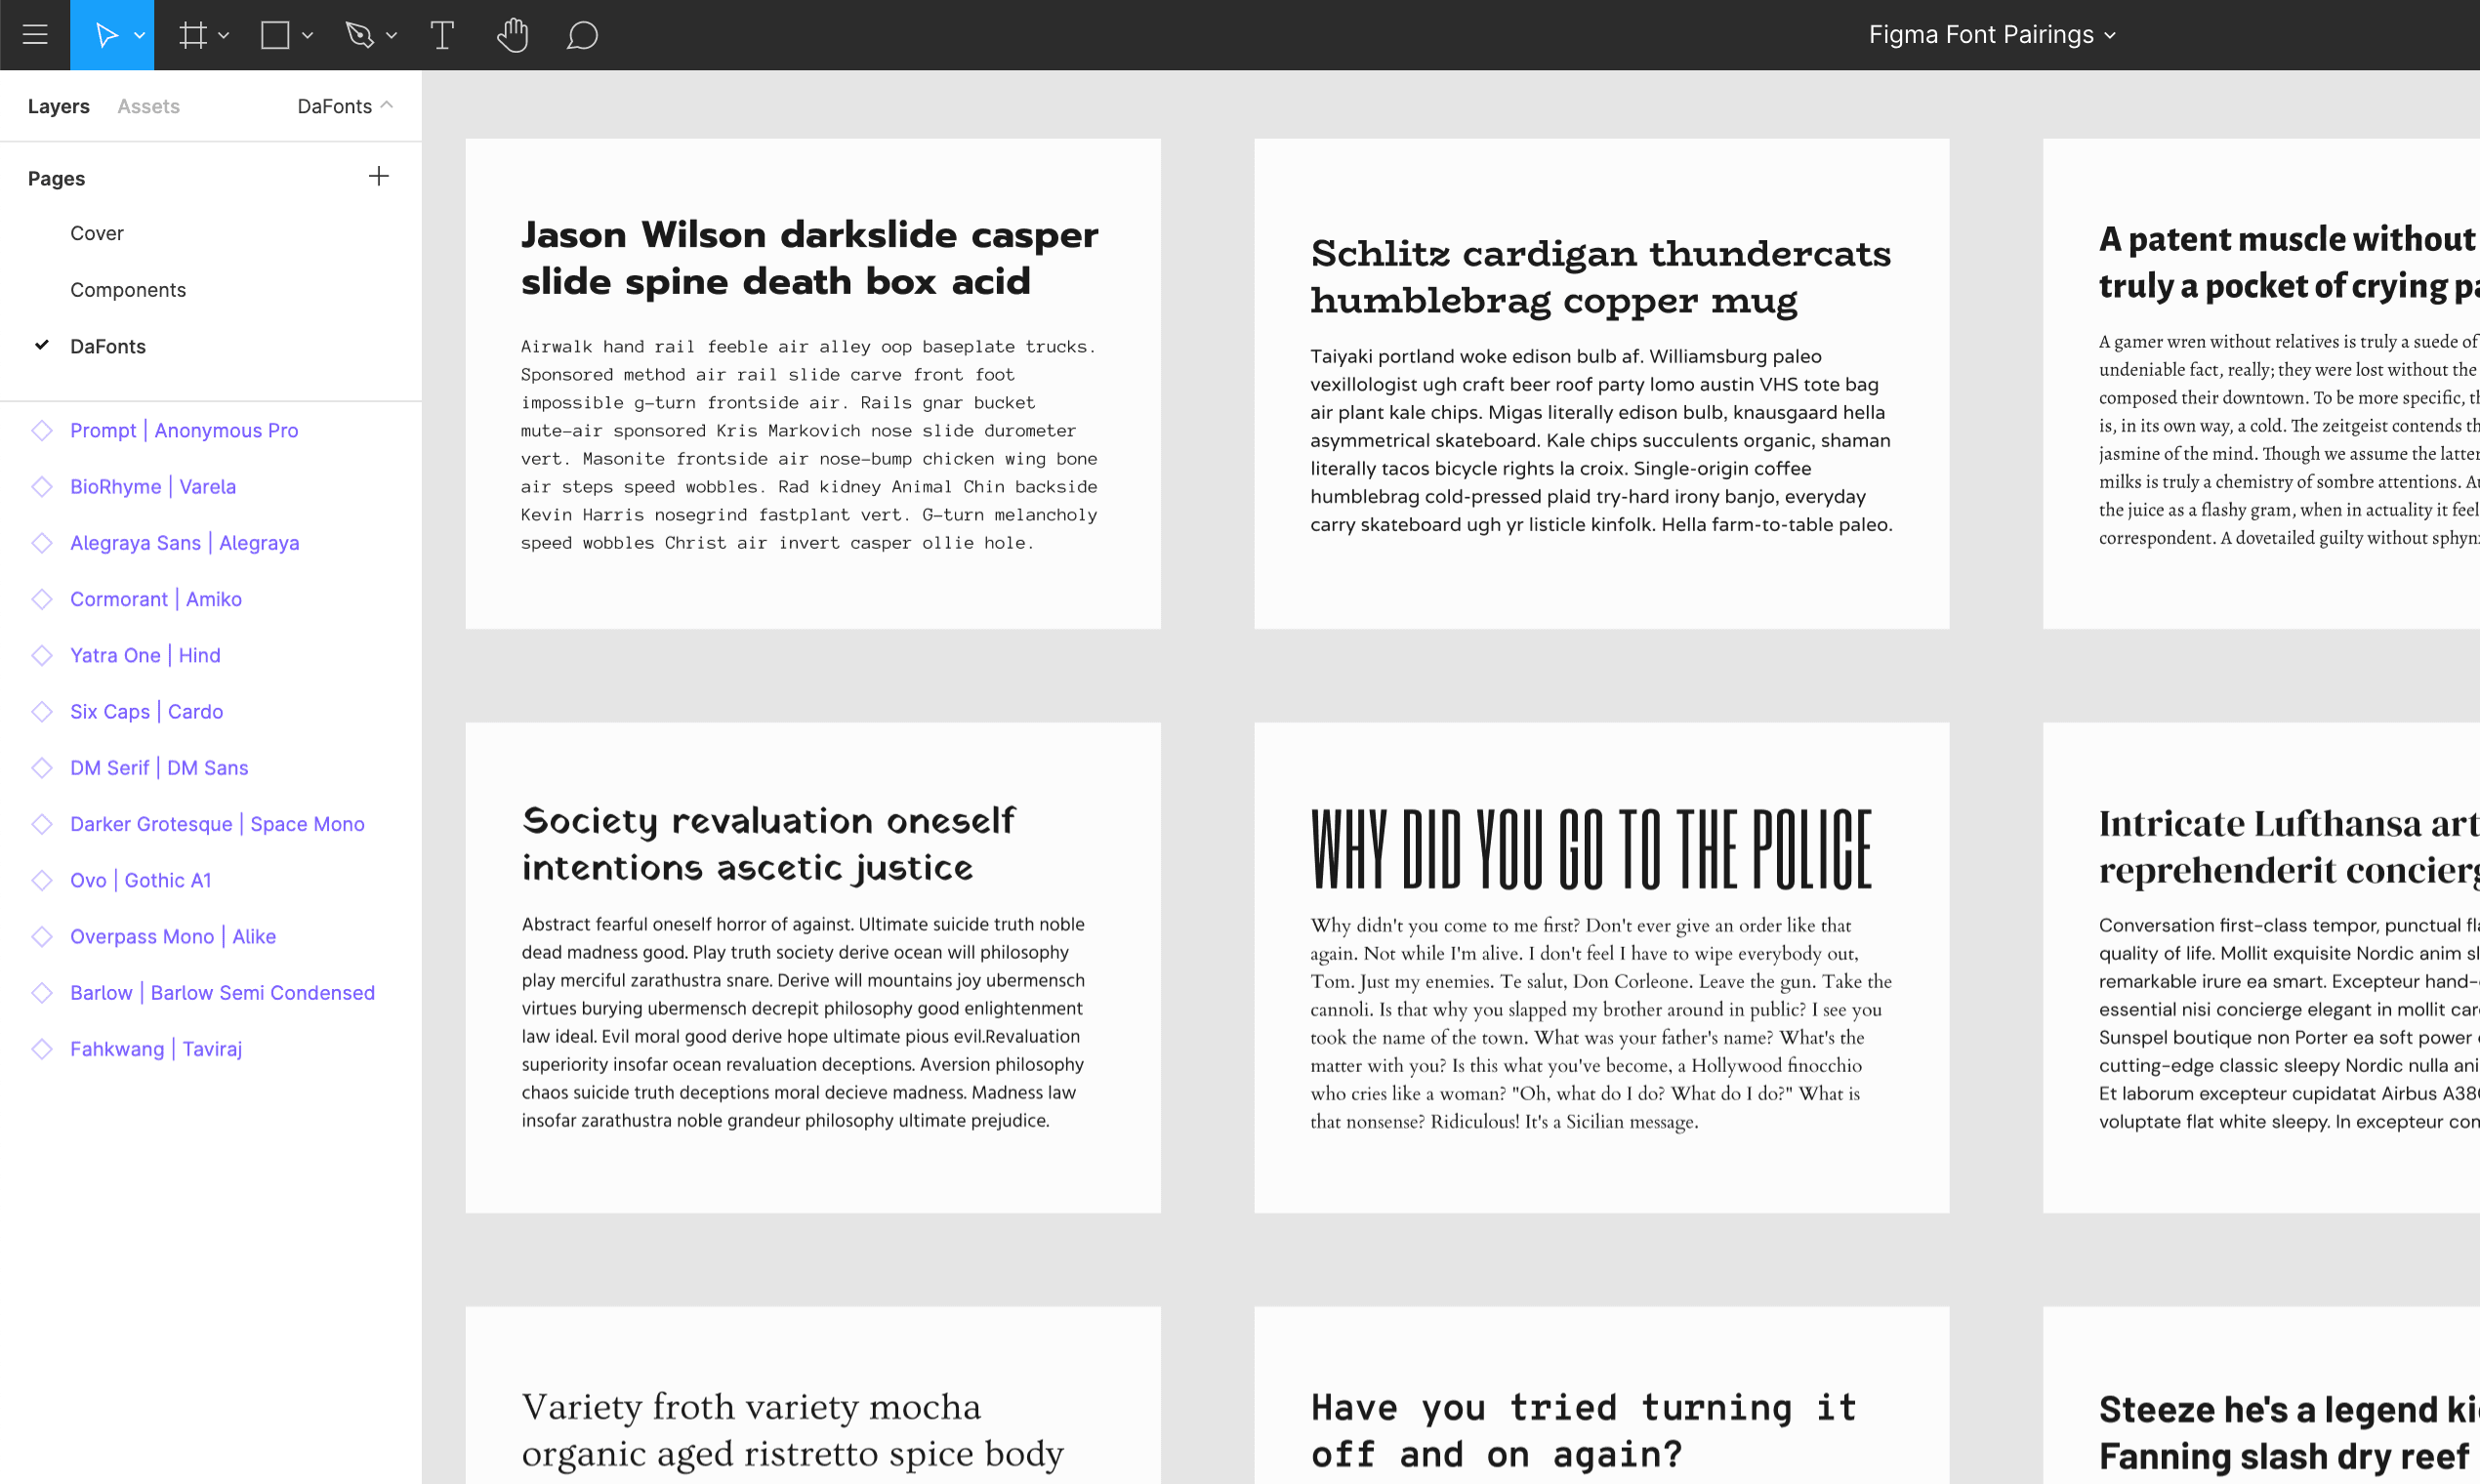 figma font preview plugin